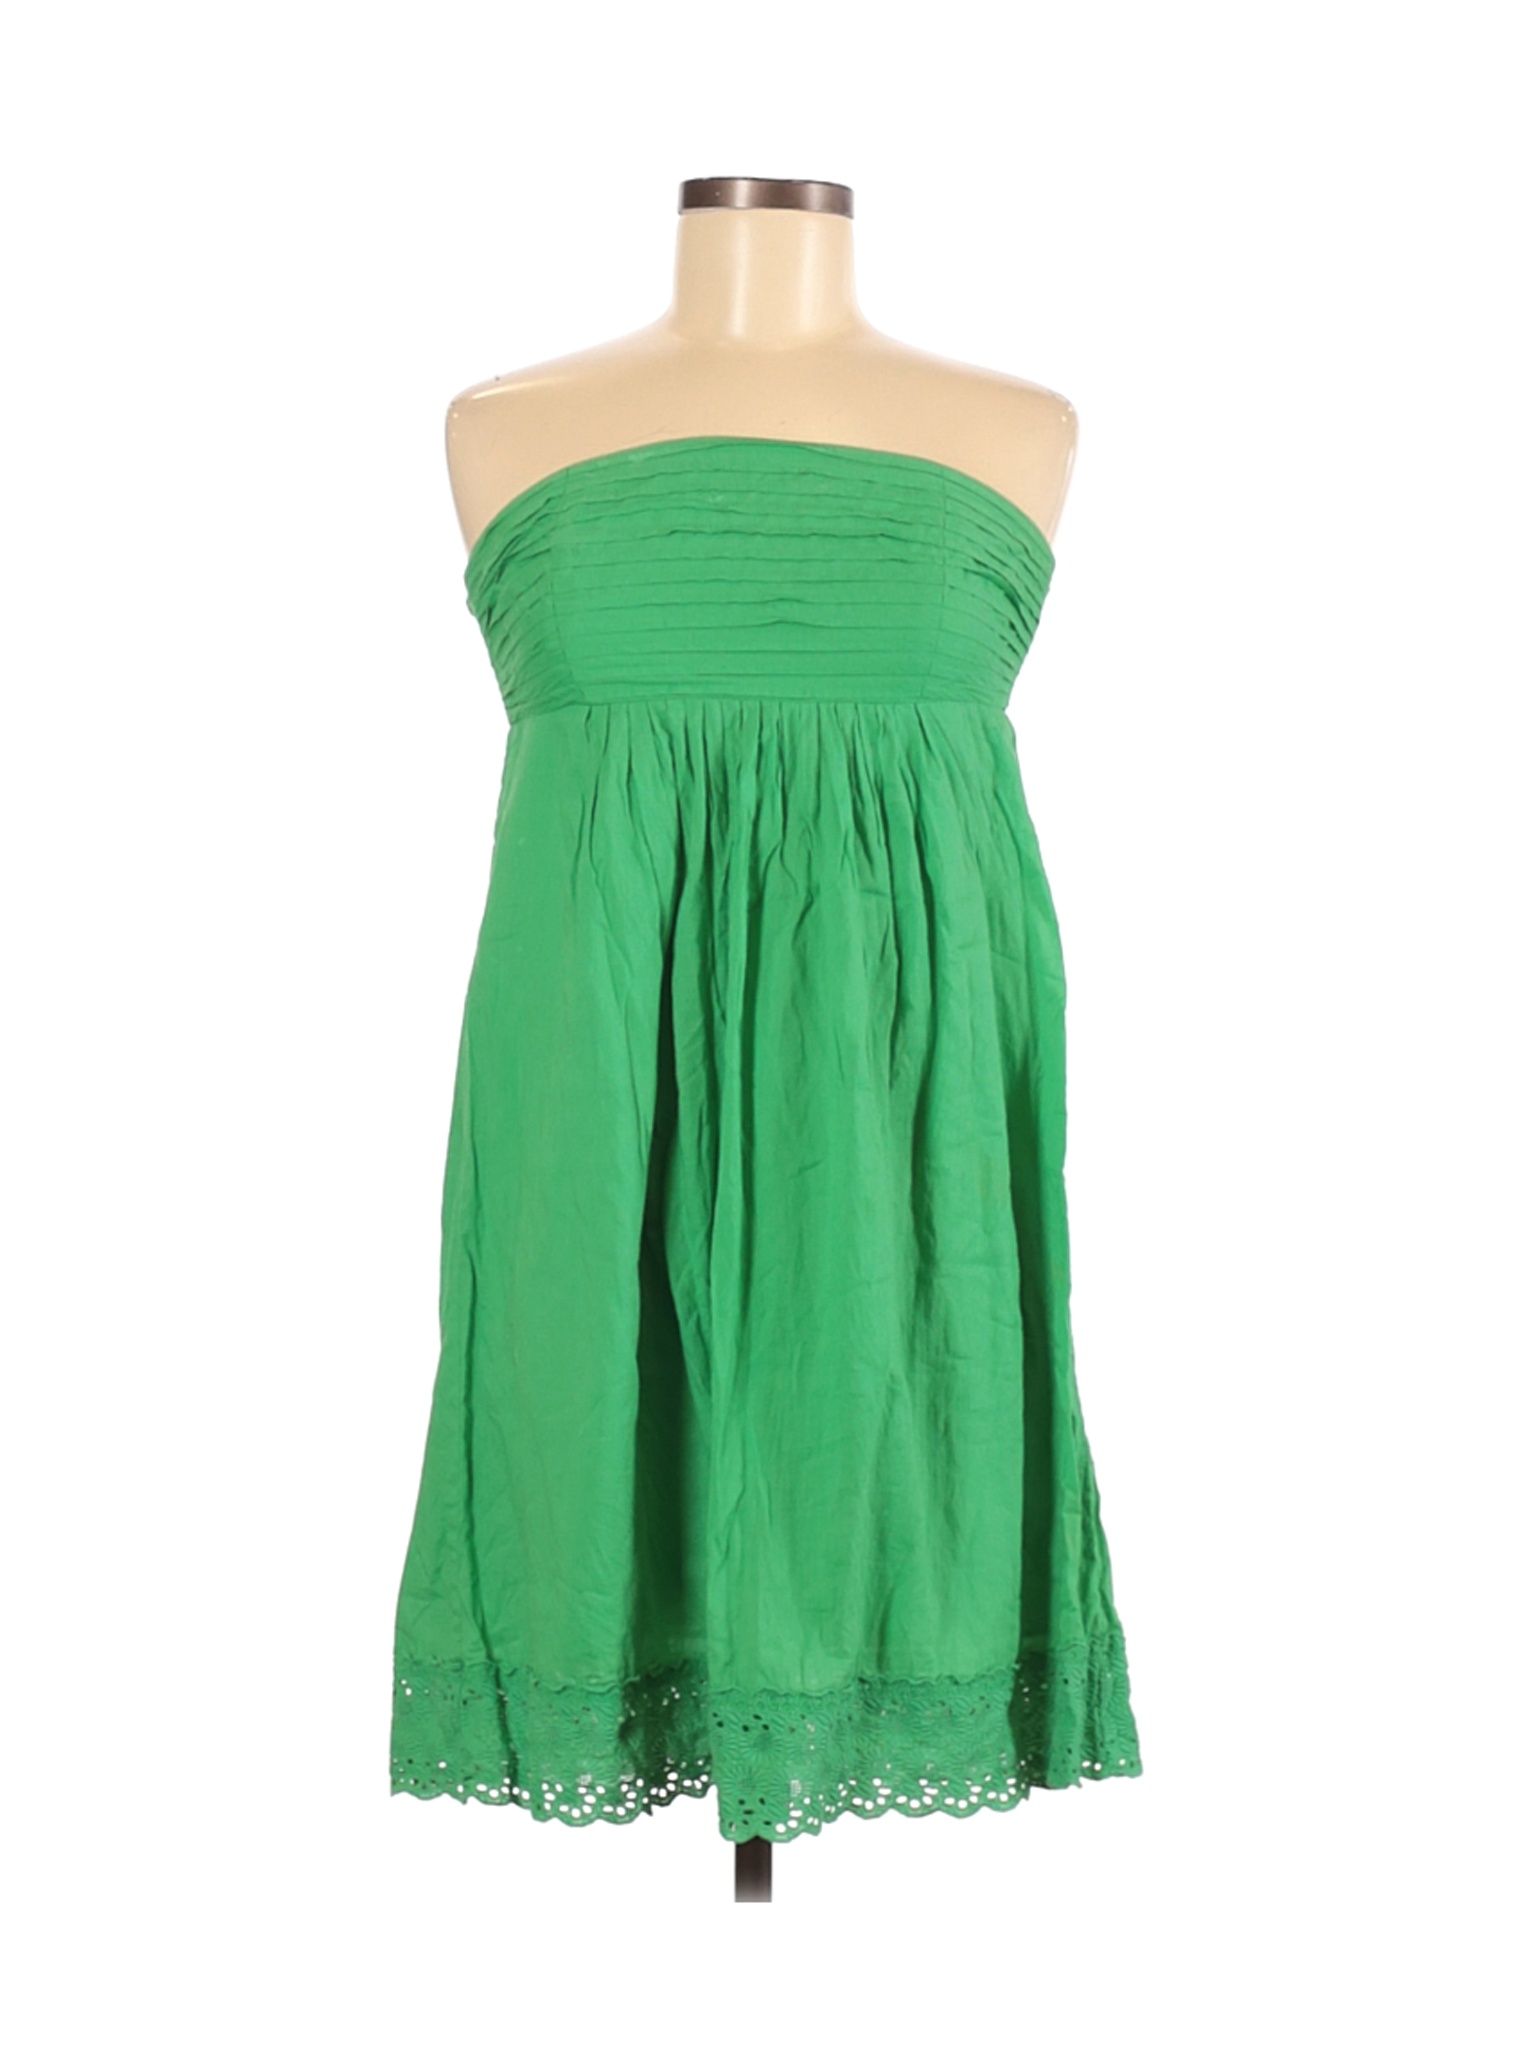 J.Crew Women Green Casual Dress S | eBay